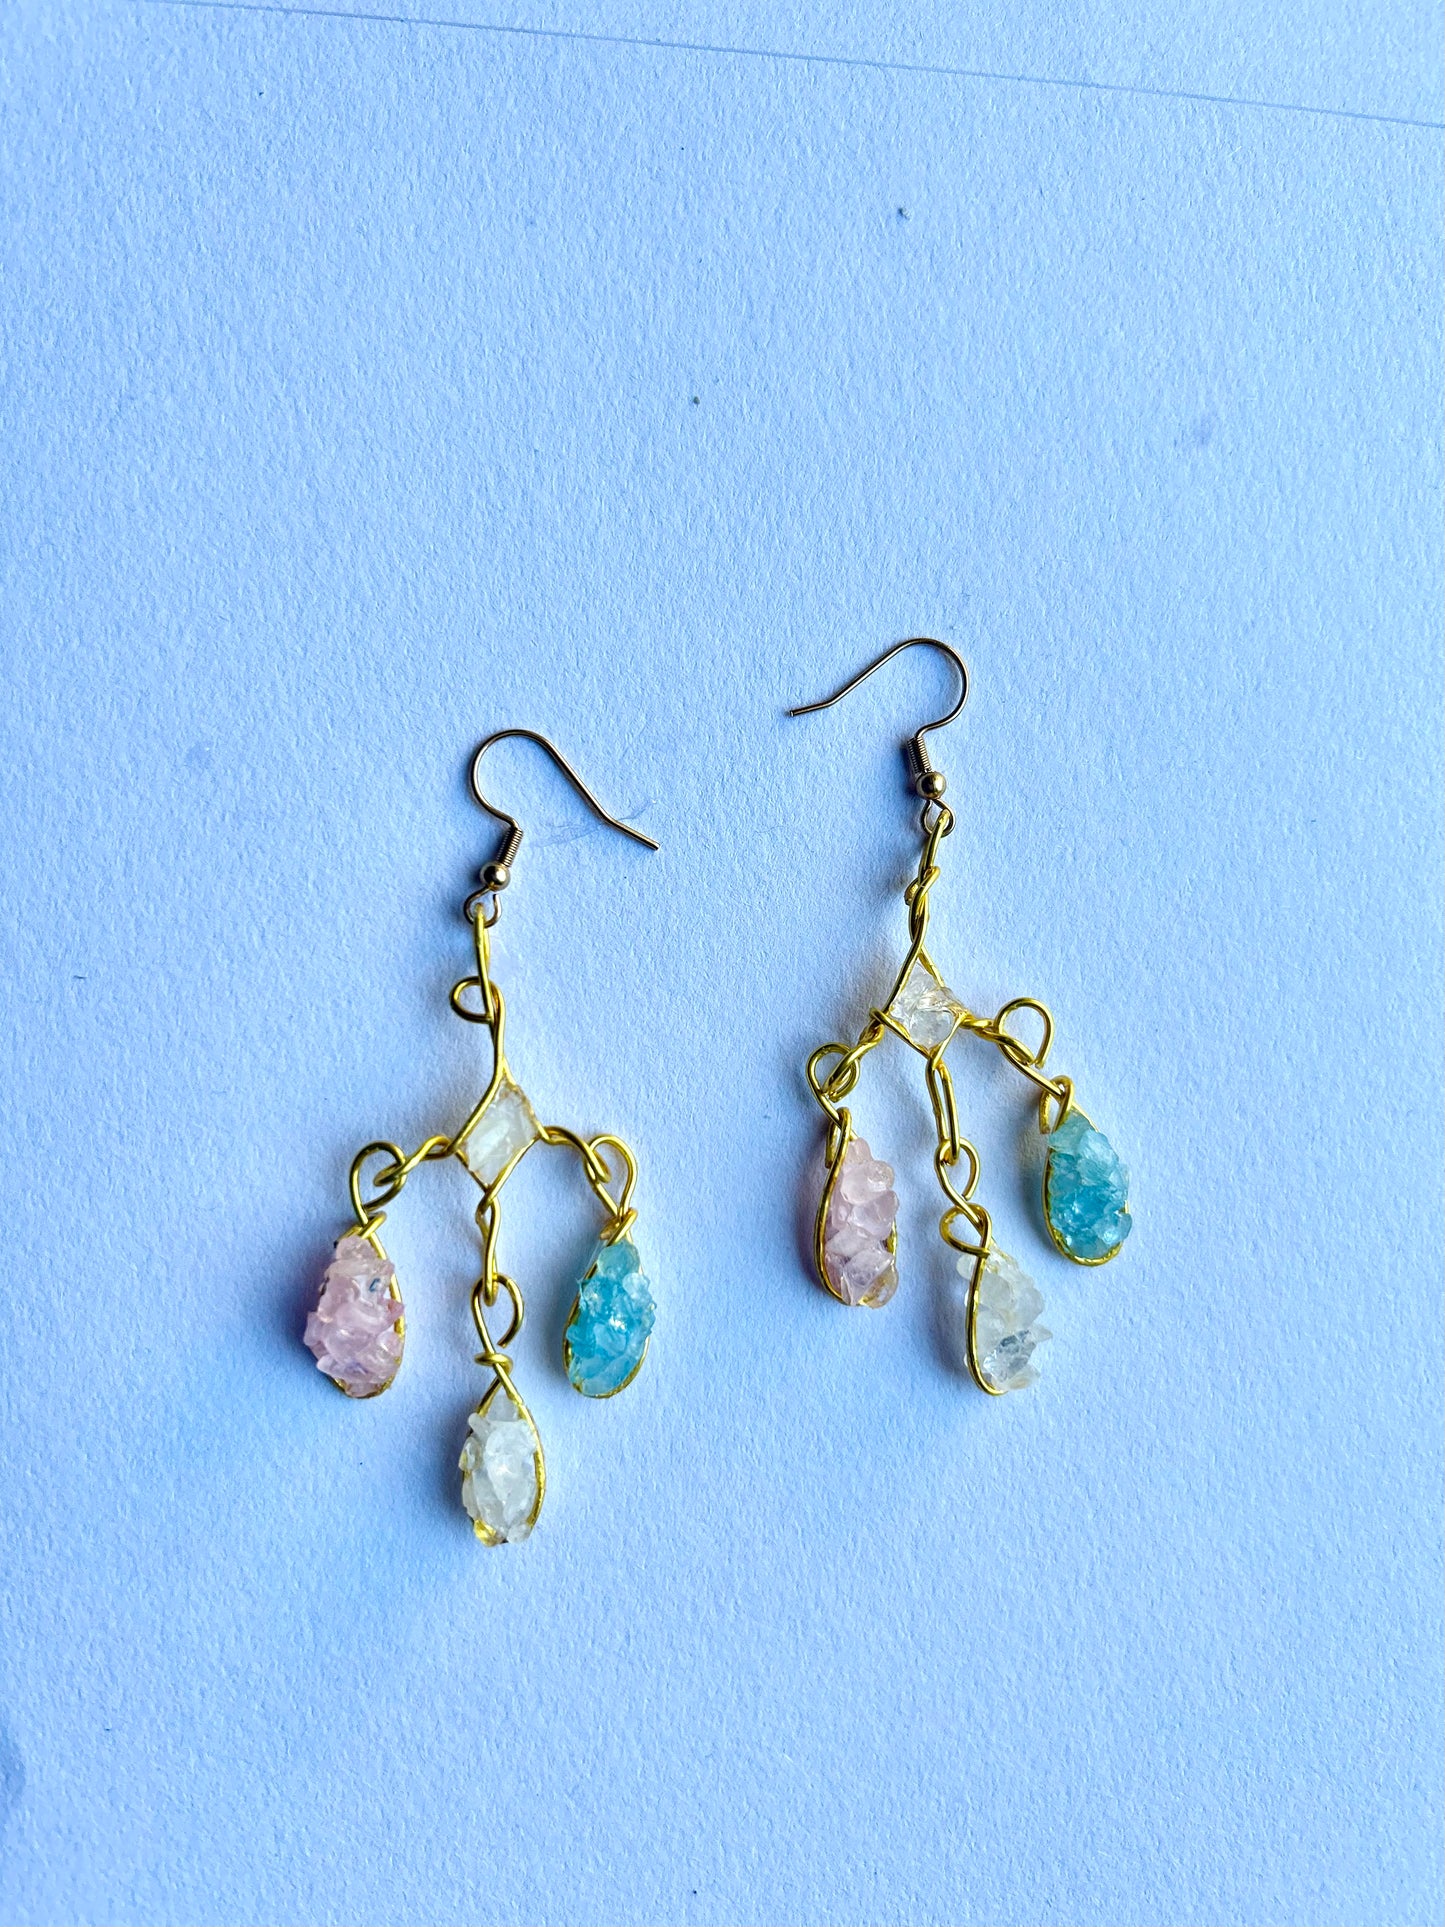 Inner Peace earrings